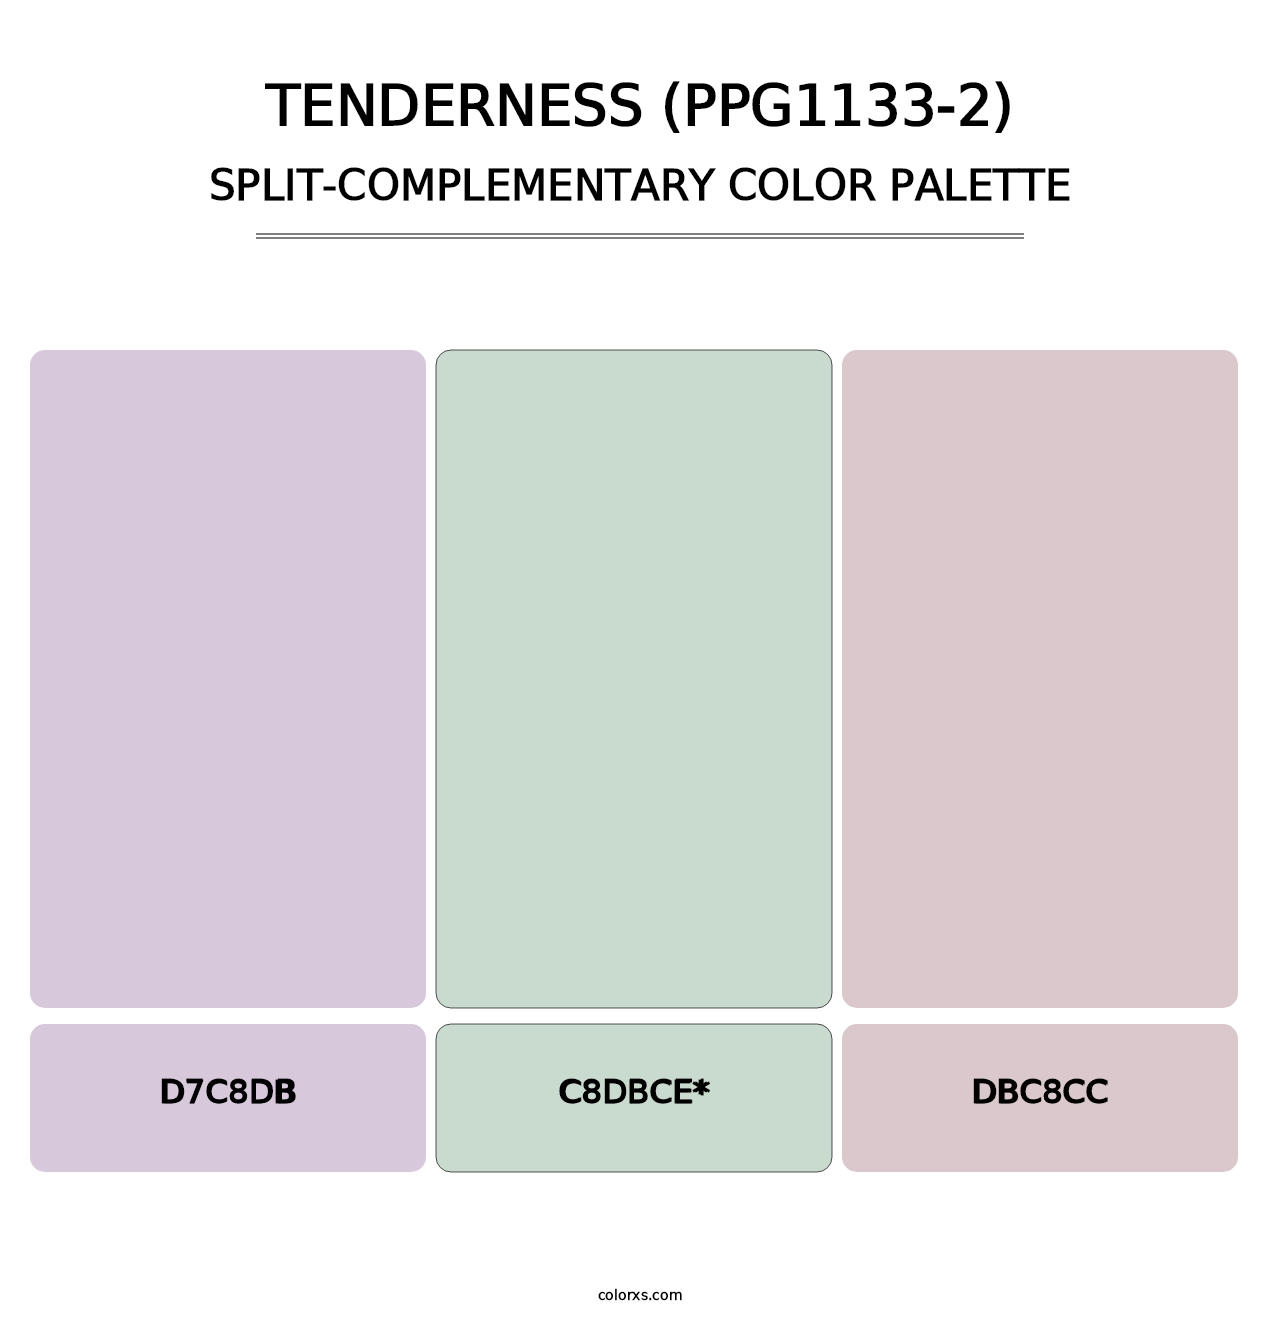 Tenderness (PPG1133-2) - Split-Complementary Color Palette